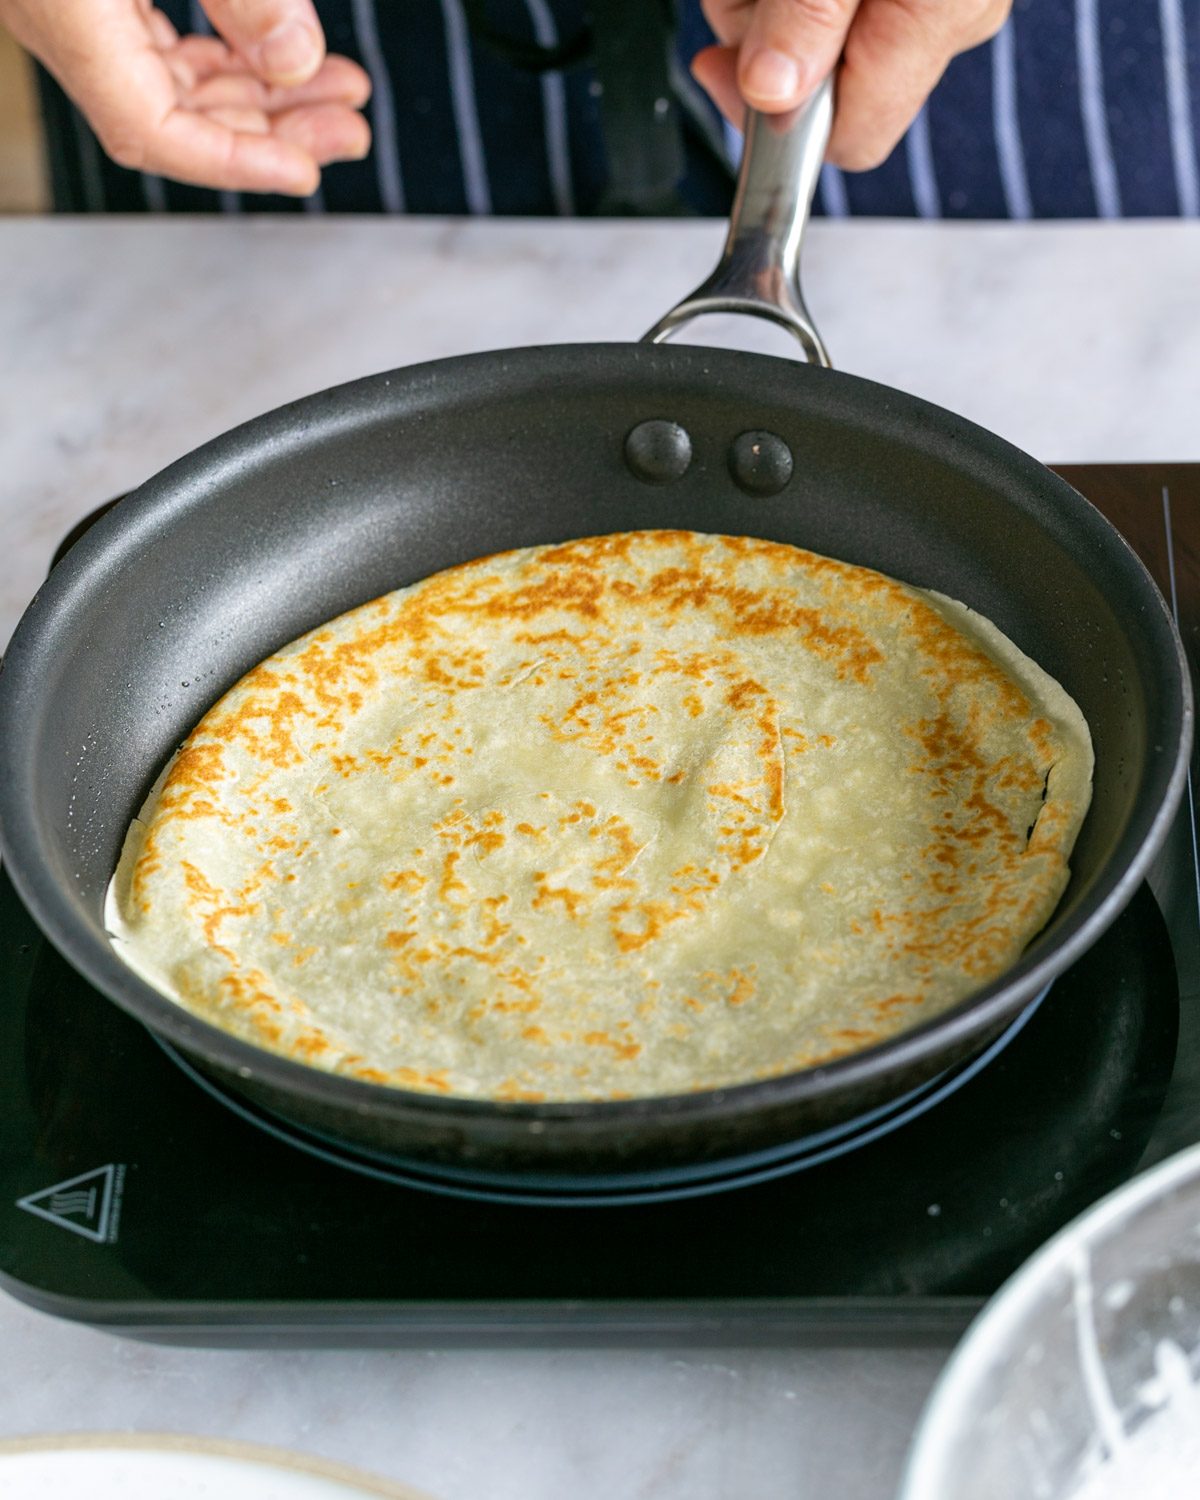 Crepe in a pan